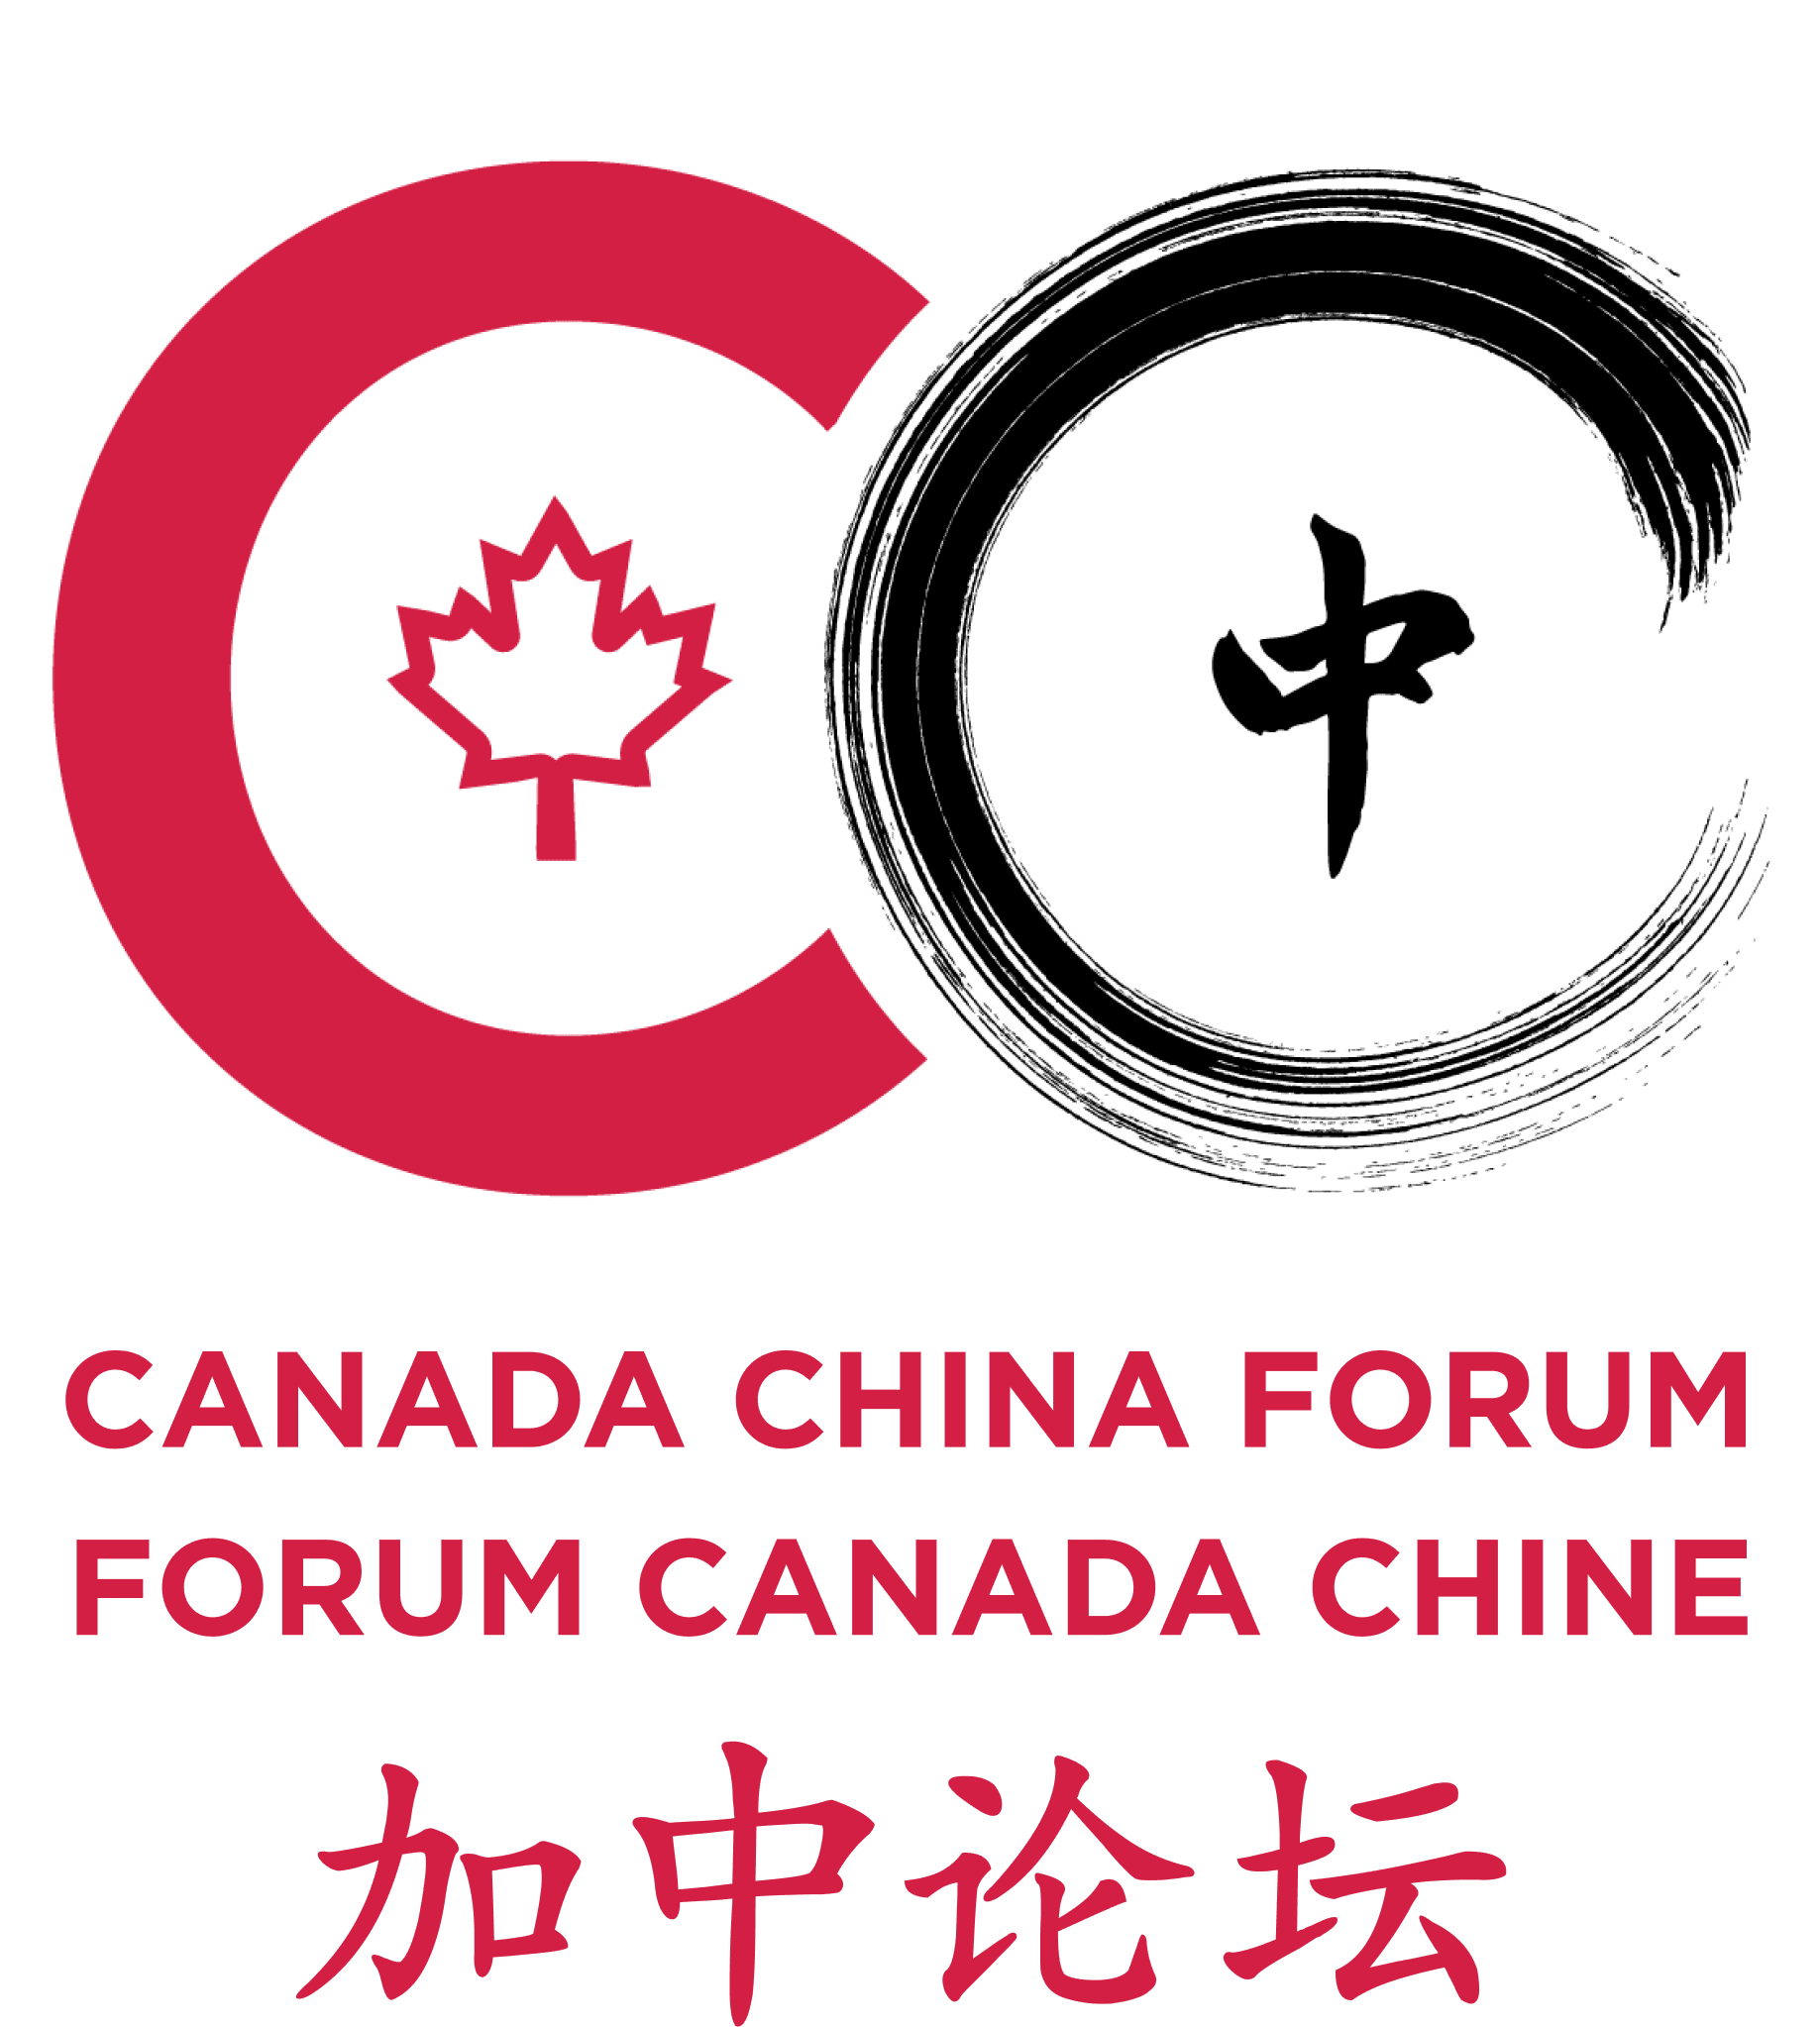 Canada China Forum